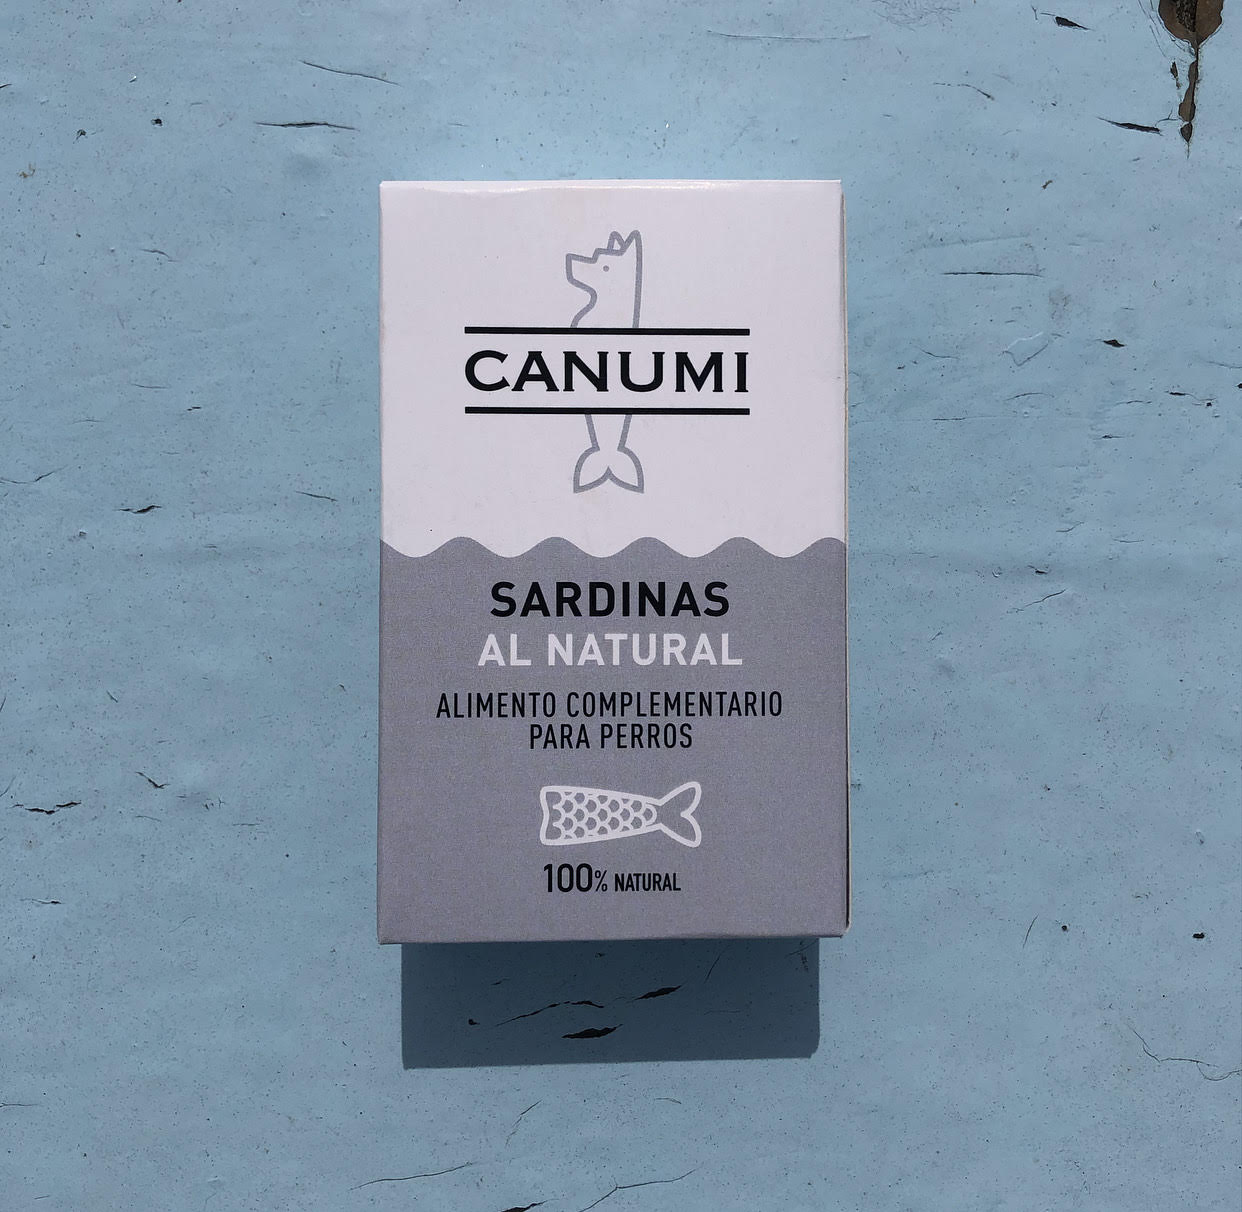 Lata de sardinas al natural Canumi